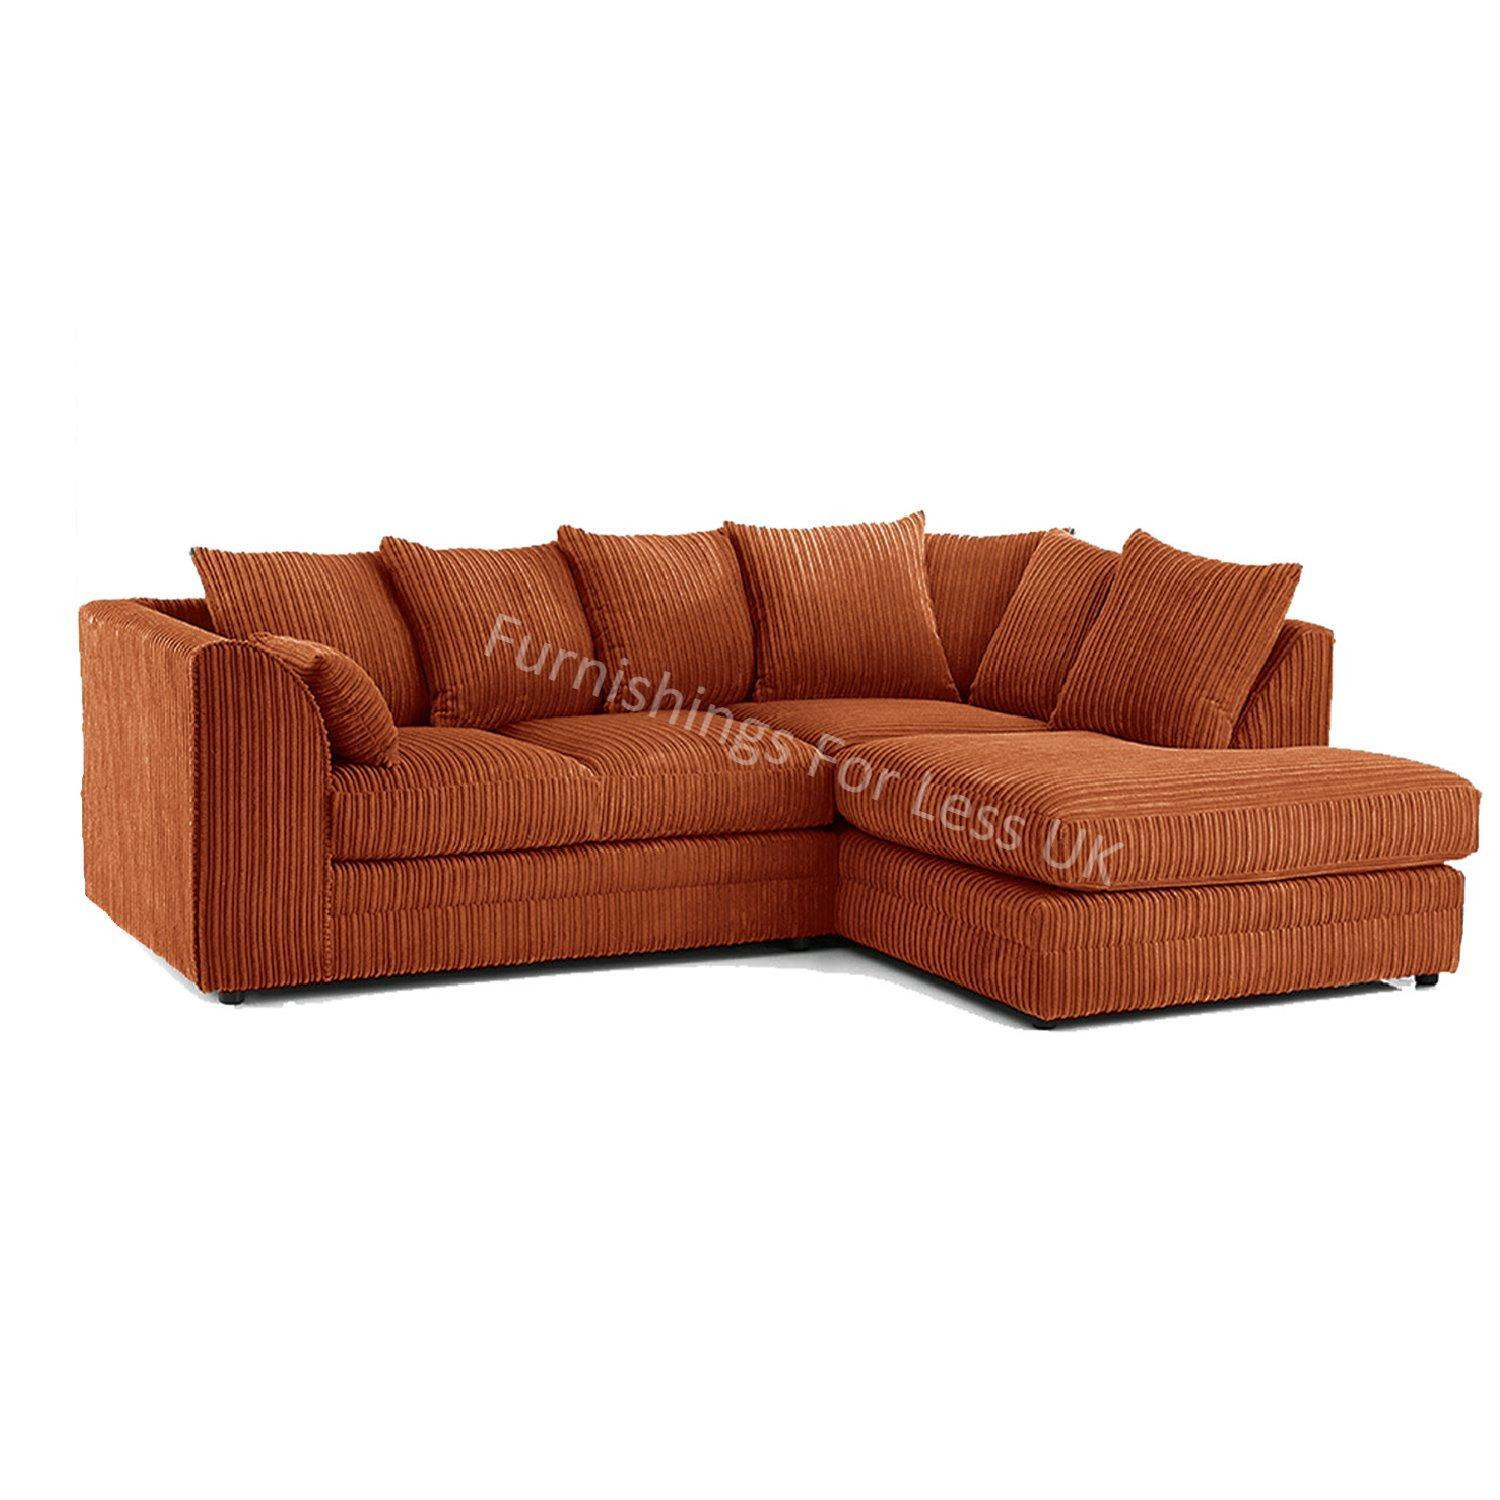 Luxor Jumbo Cord 4 Seater Corner sofa Right Hand Facing